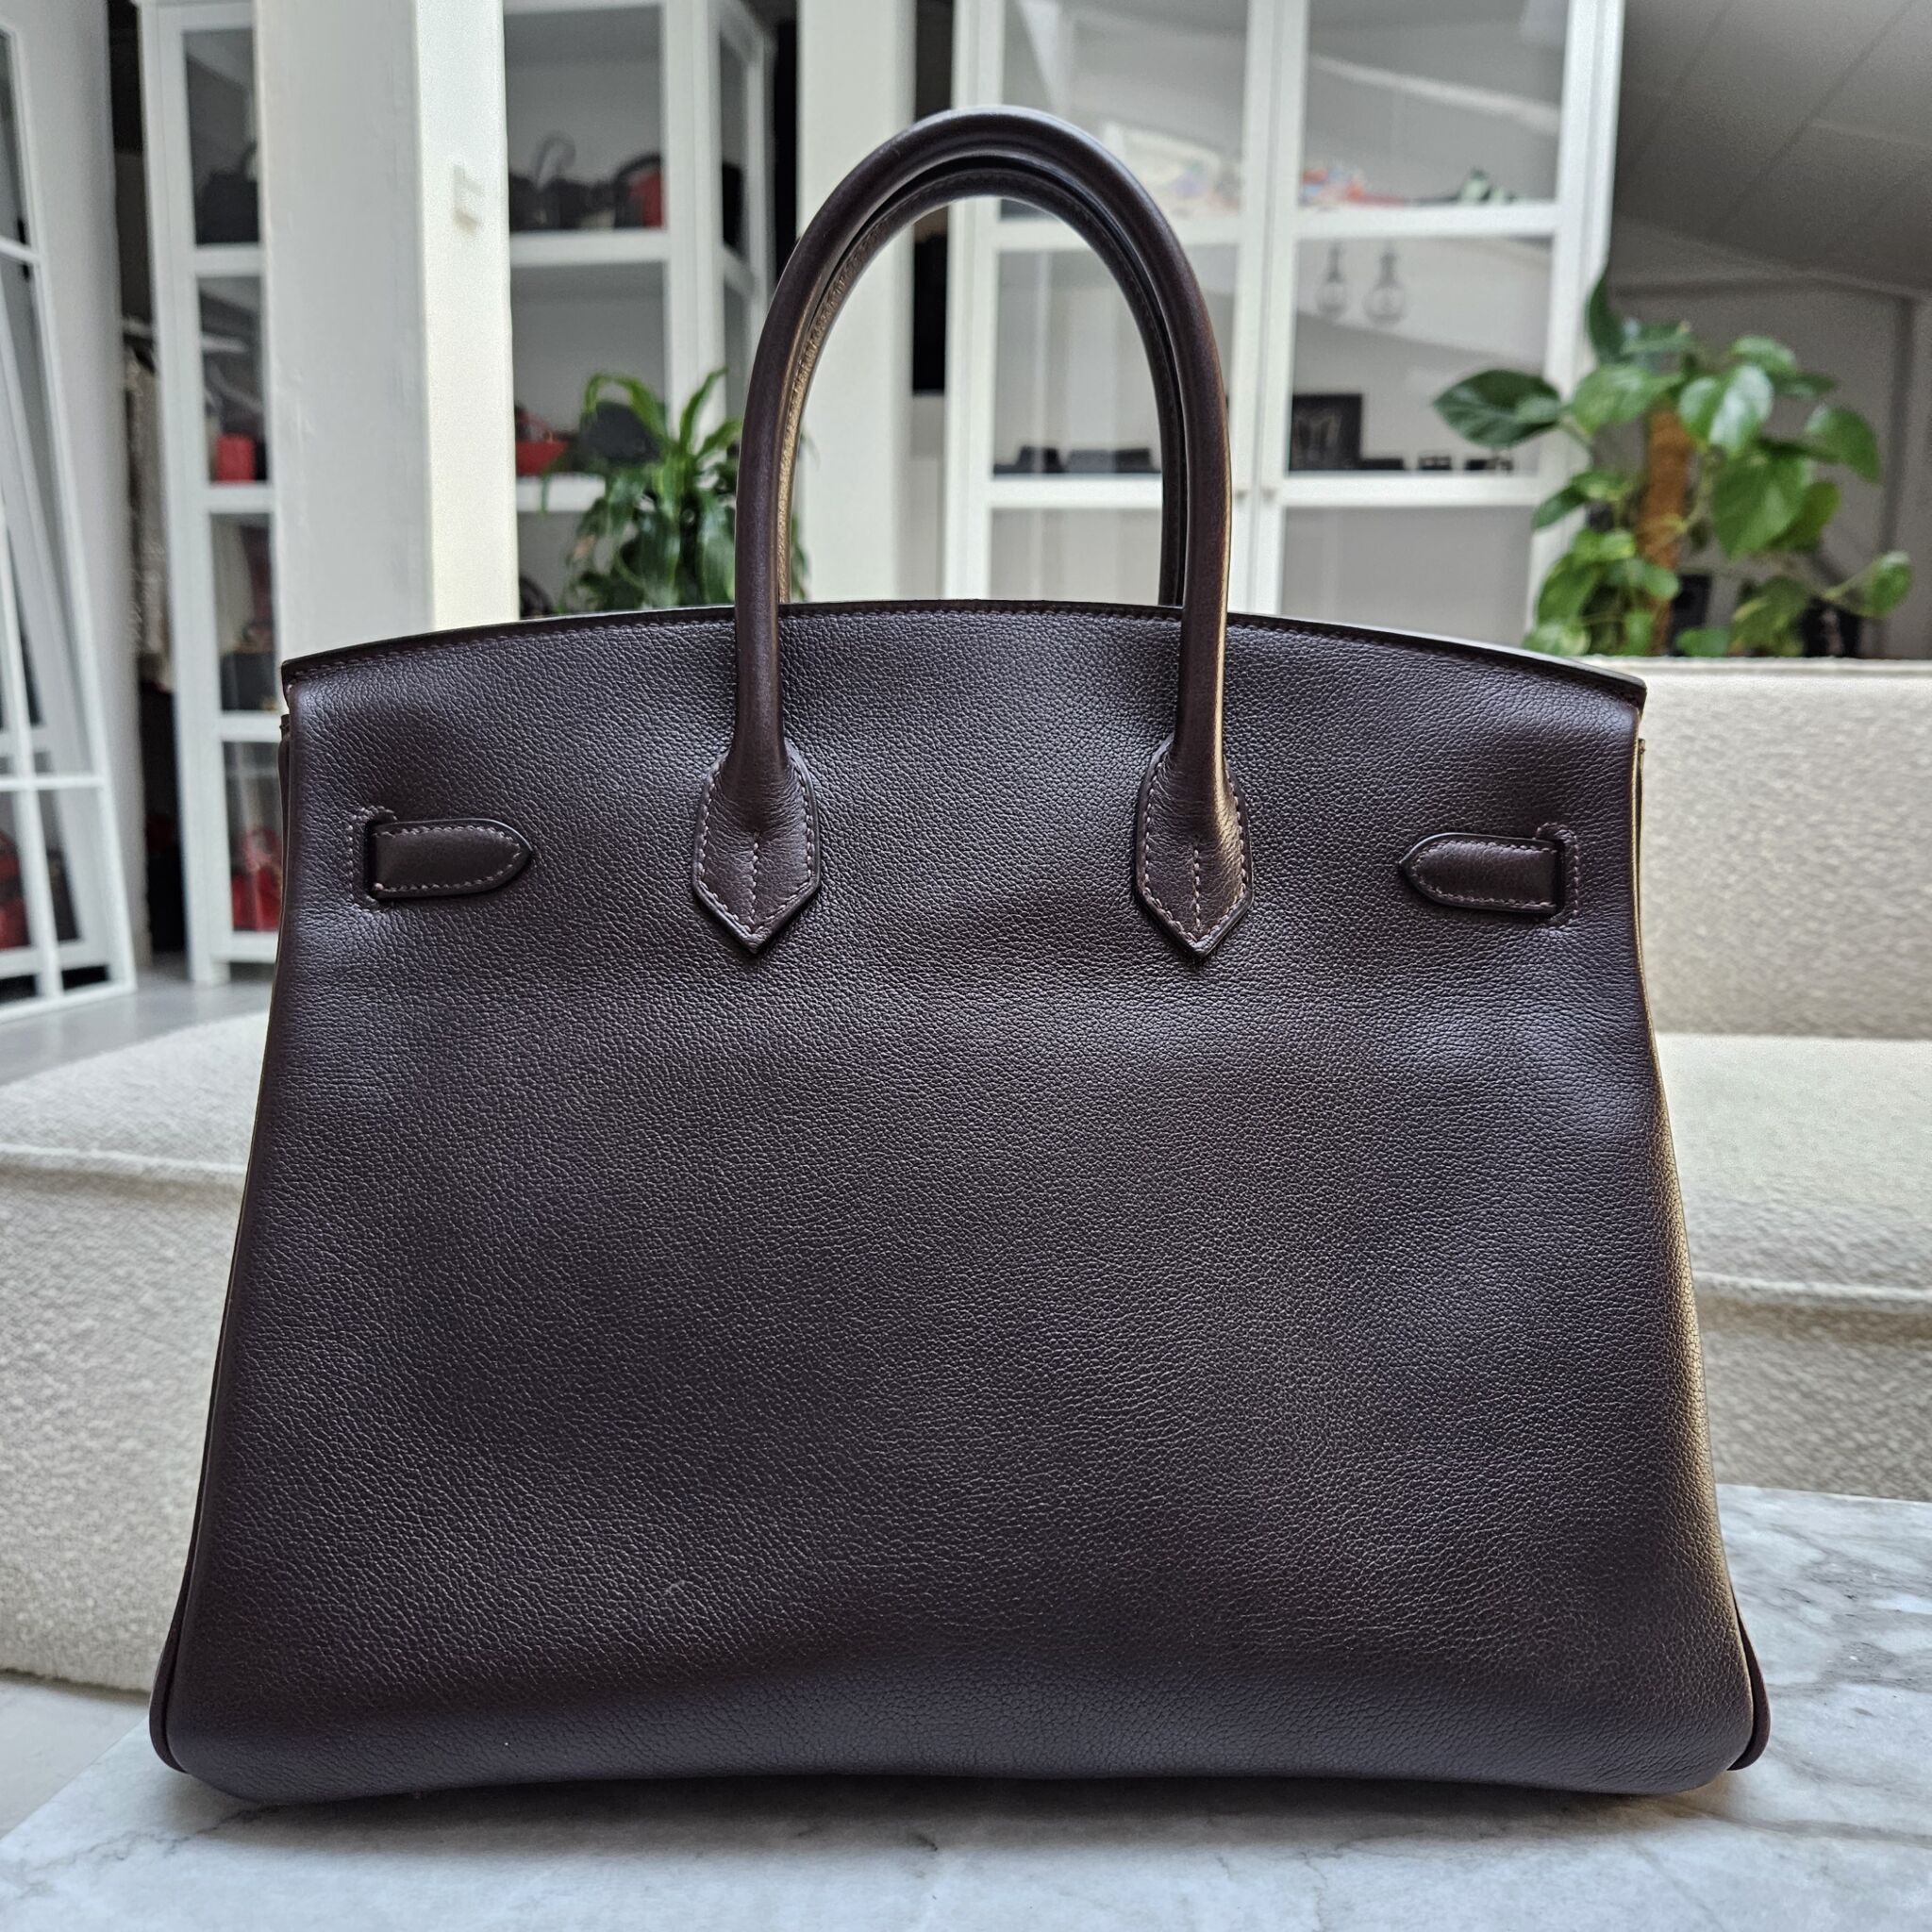 Hermes Birkin 35 In Grey: Veau Togo Handbag